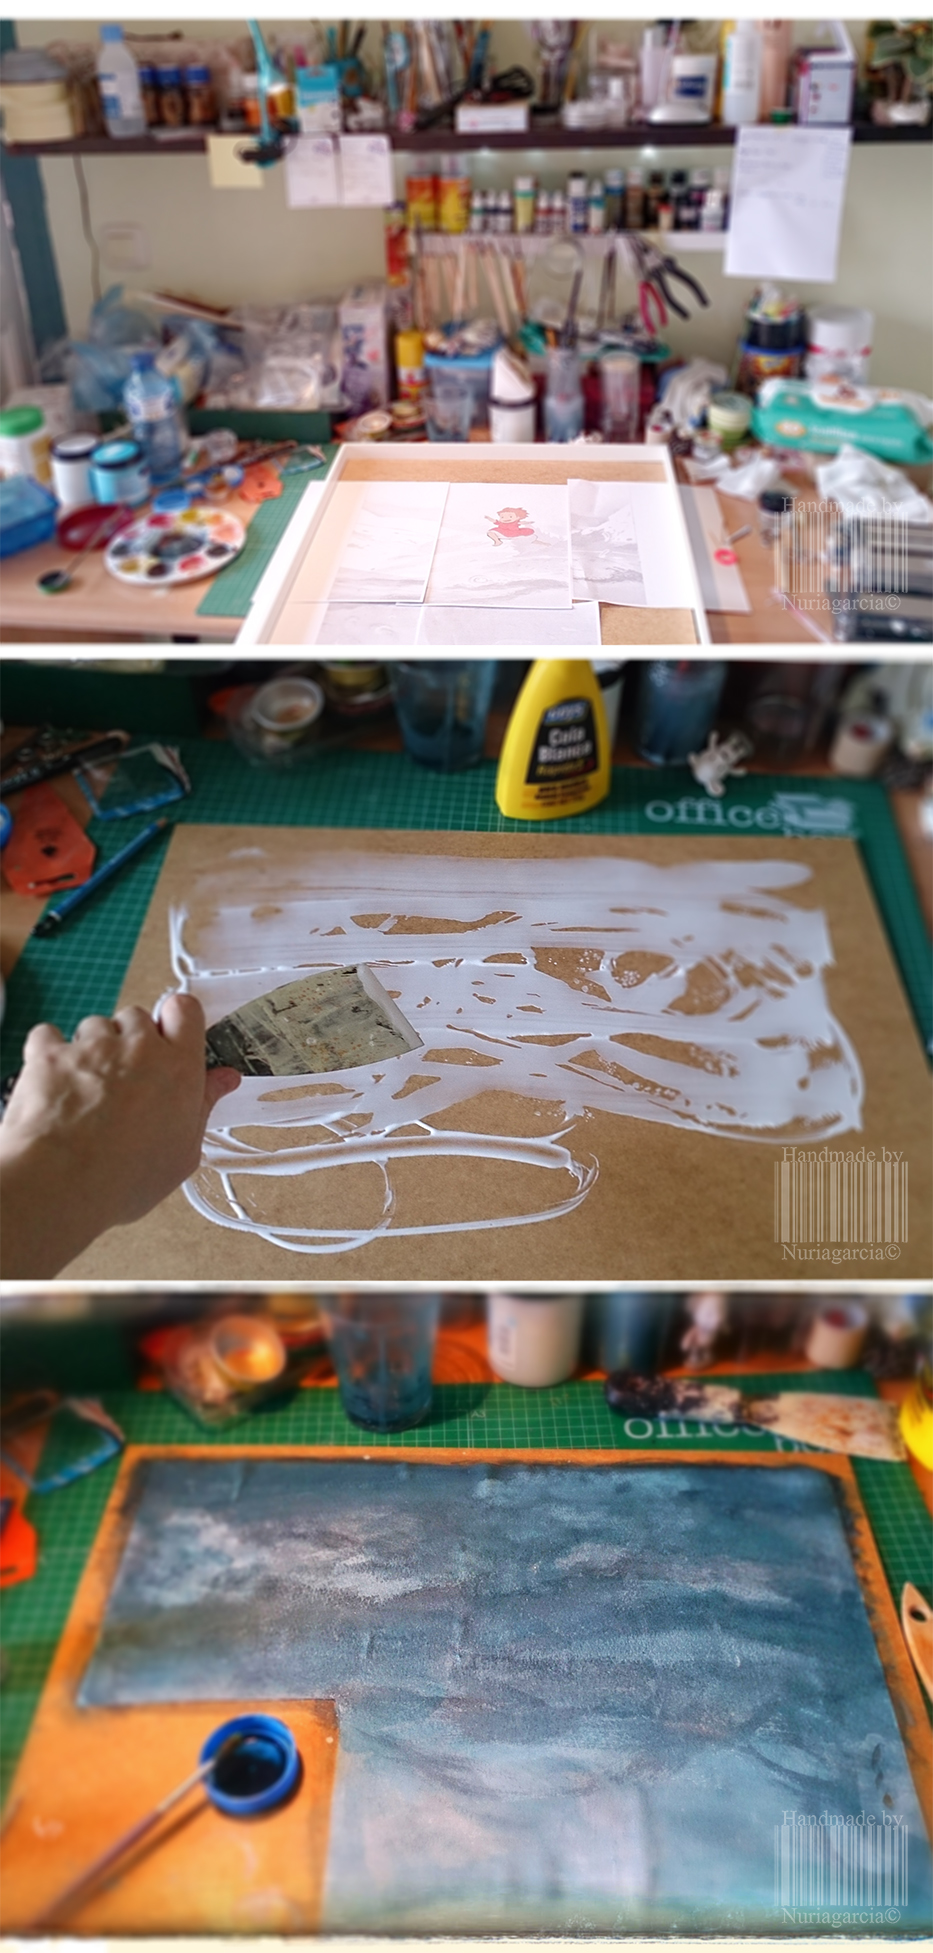 Plasticine sculpey ponyo Ghibli led handmade Fan Art Ghibli Studio ILLUSTRATION 